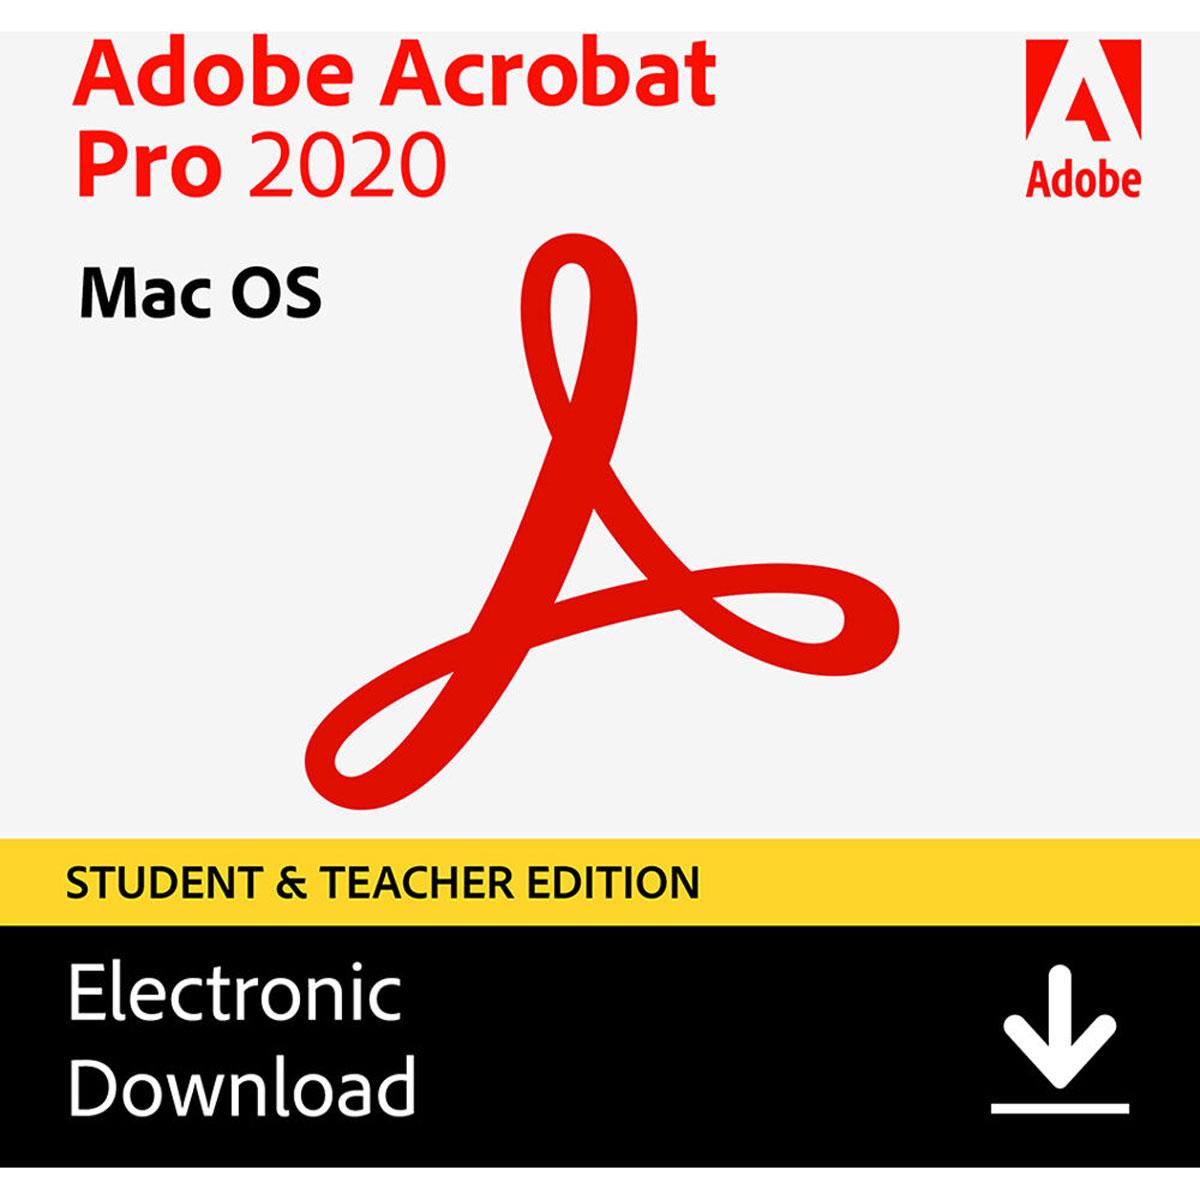 Adobe Acrobat Pro 2020 Software for Mac, Student & Teacher Edition, Download -  65312077